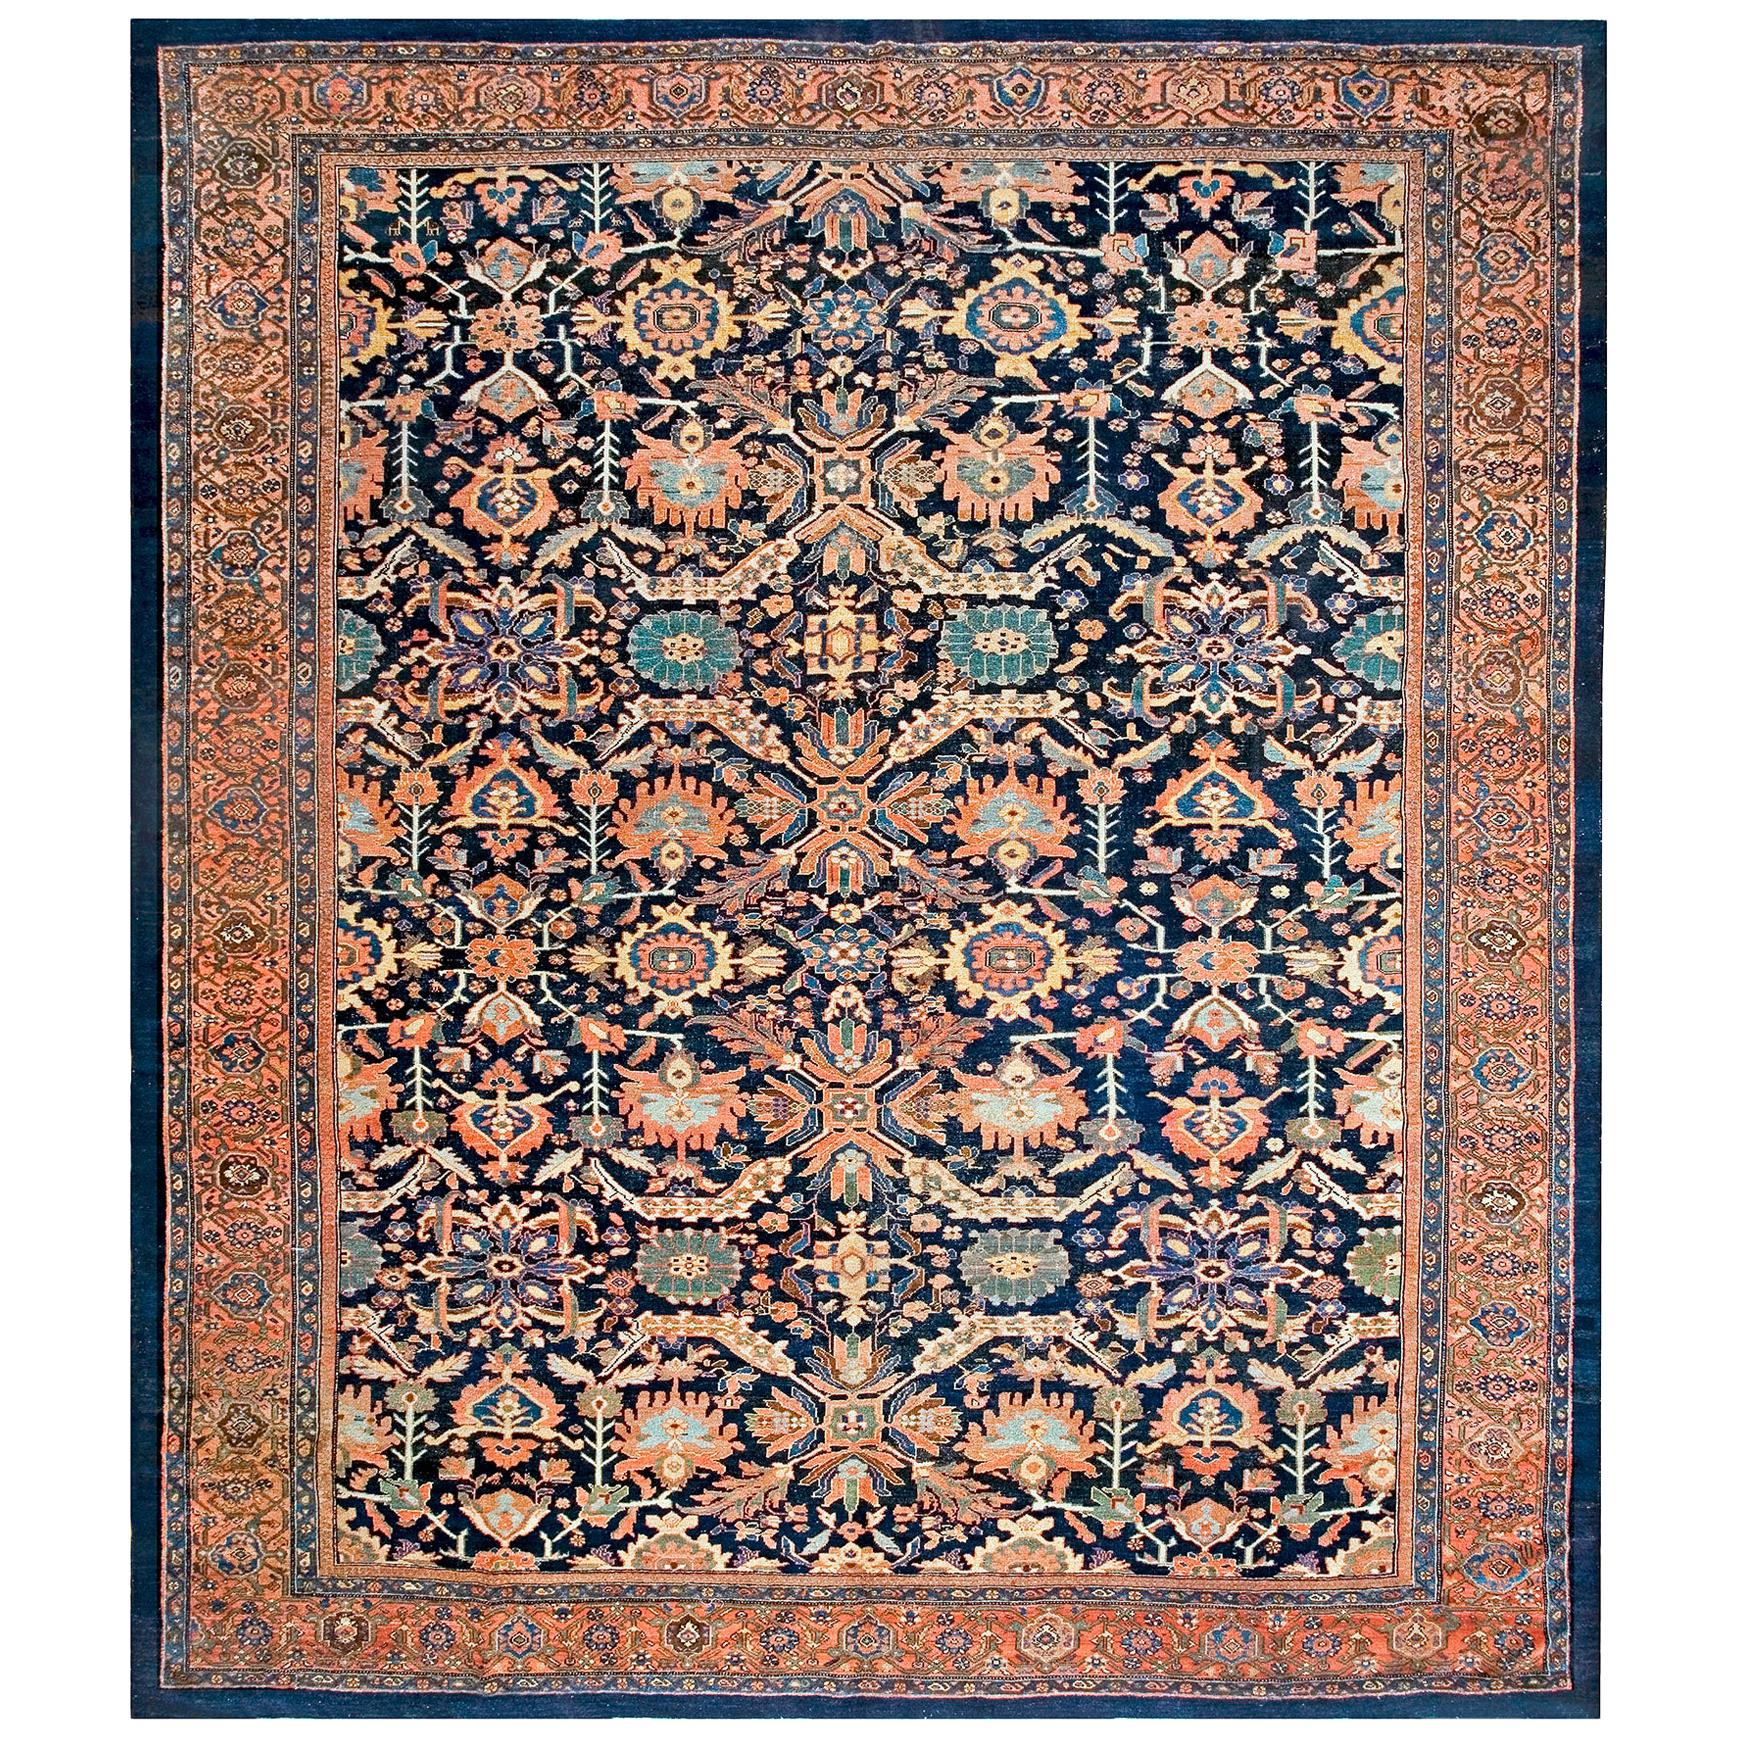 19th Century Persian Malayer Carpet ( 12'4" x 14'8" - 375 x 448 )